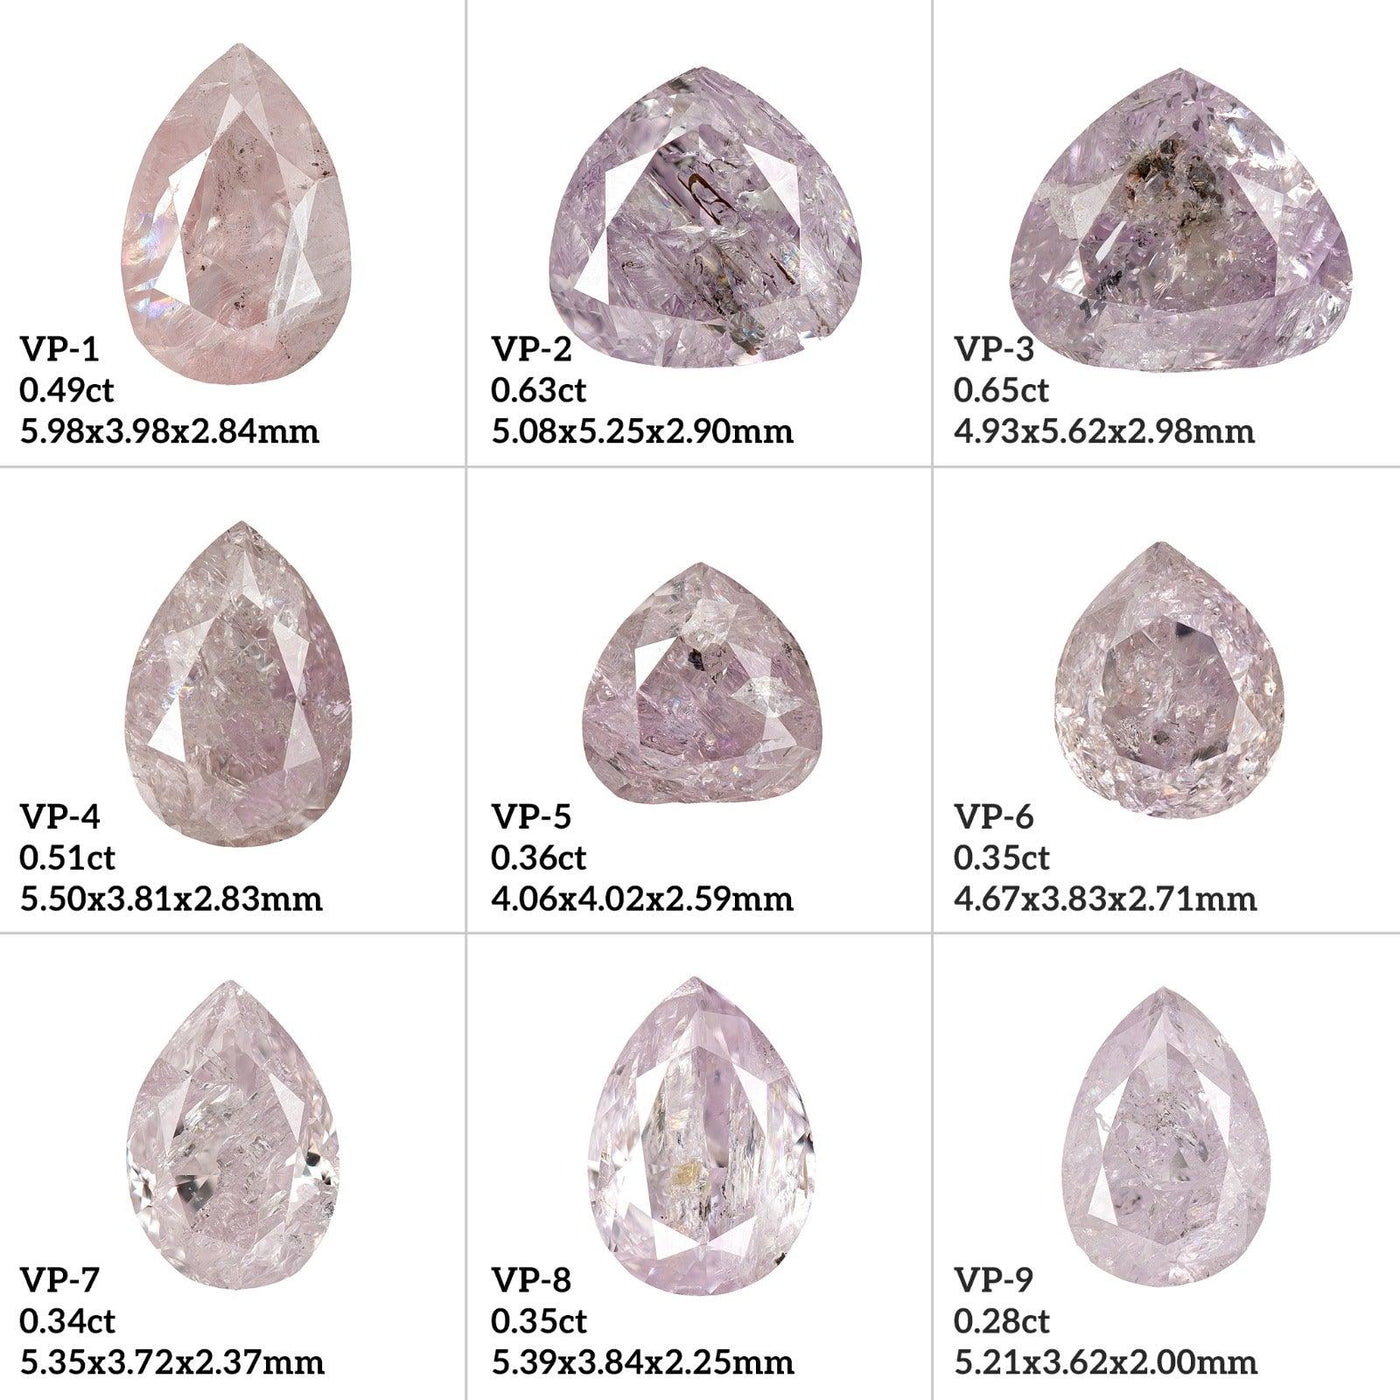 VP1 - Vivid pink pear diamond - Rubysta